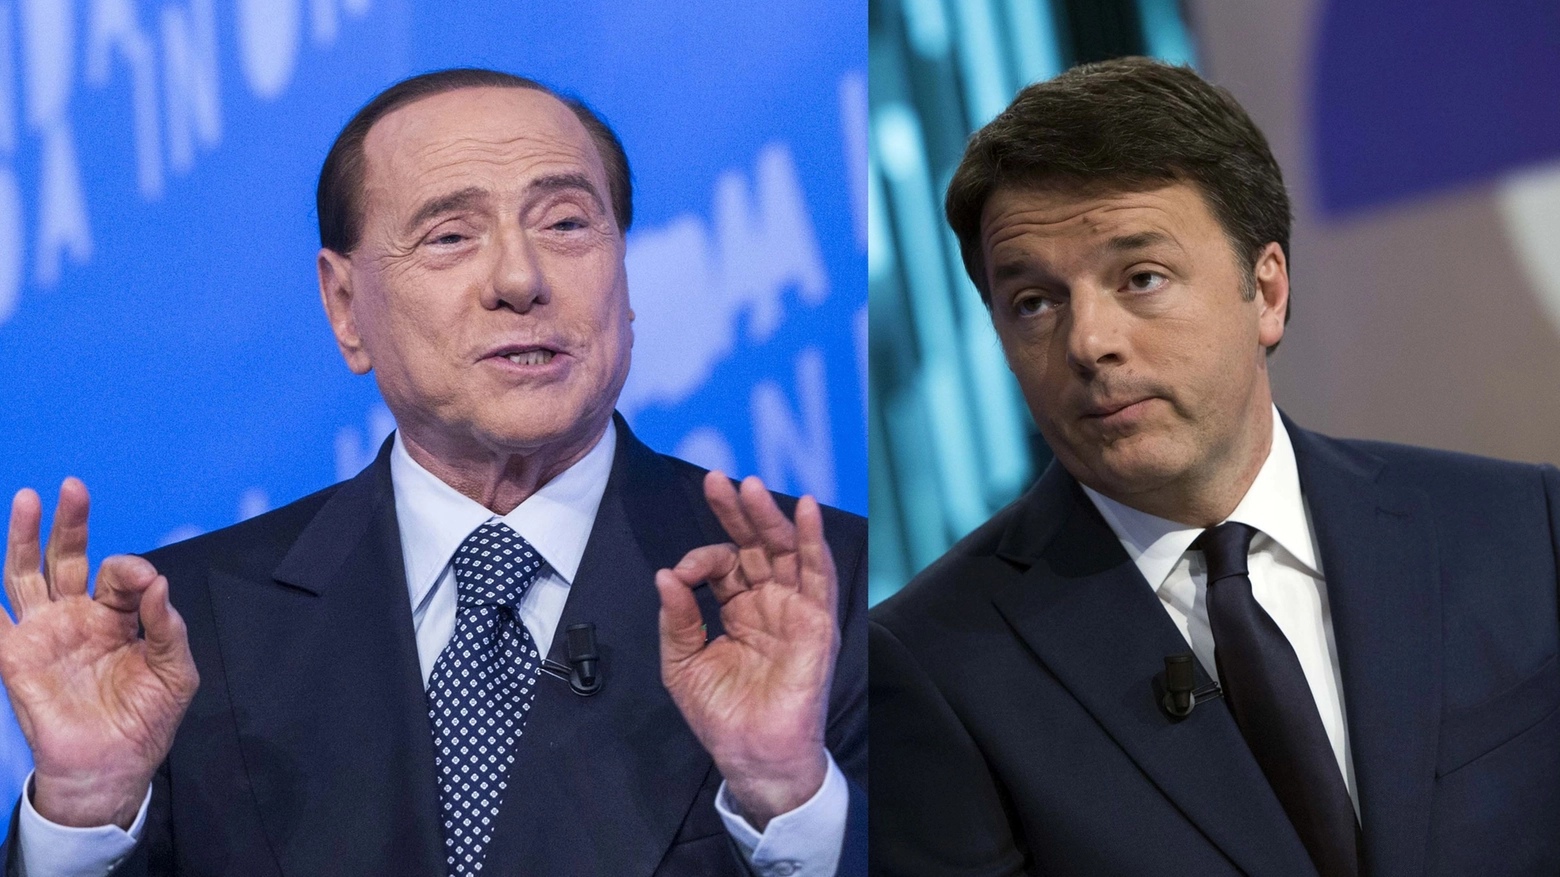 Silvio Berlusconi e Matteo Renzi (ImagoE / Lapresse)